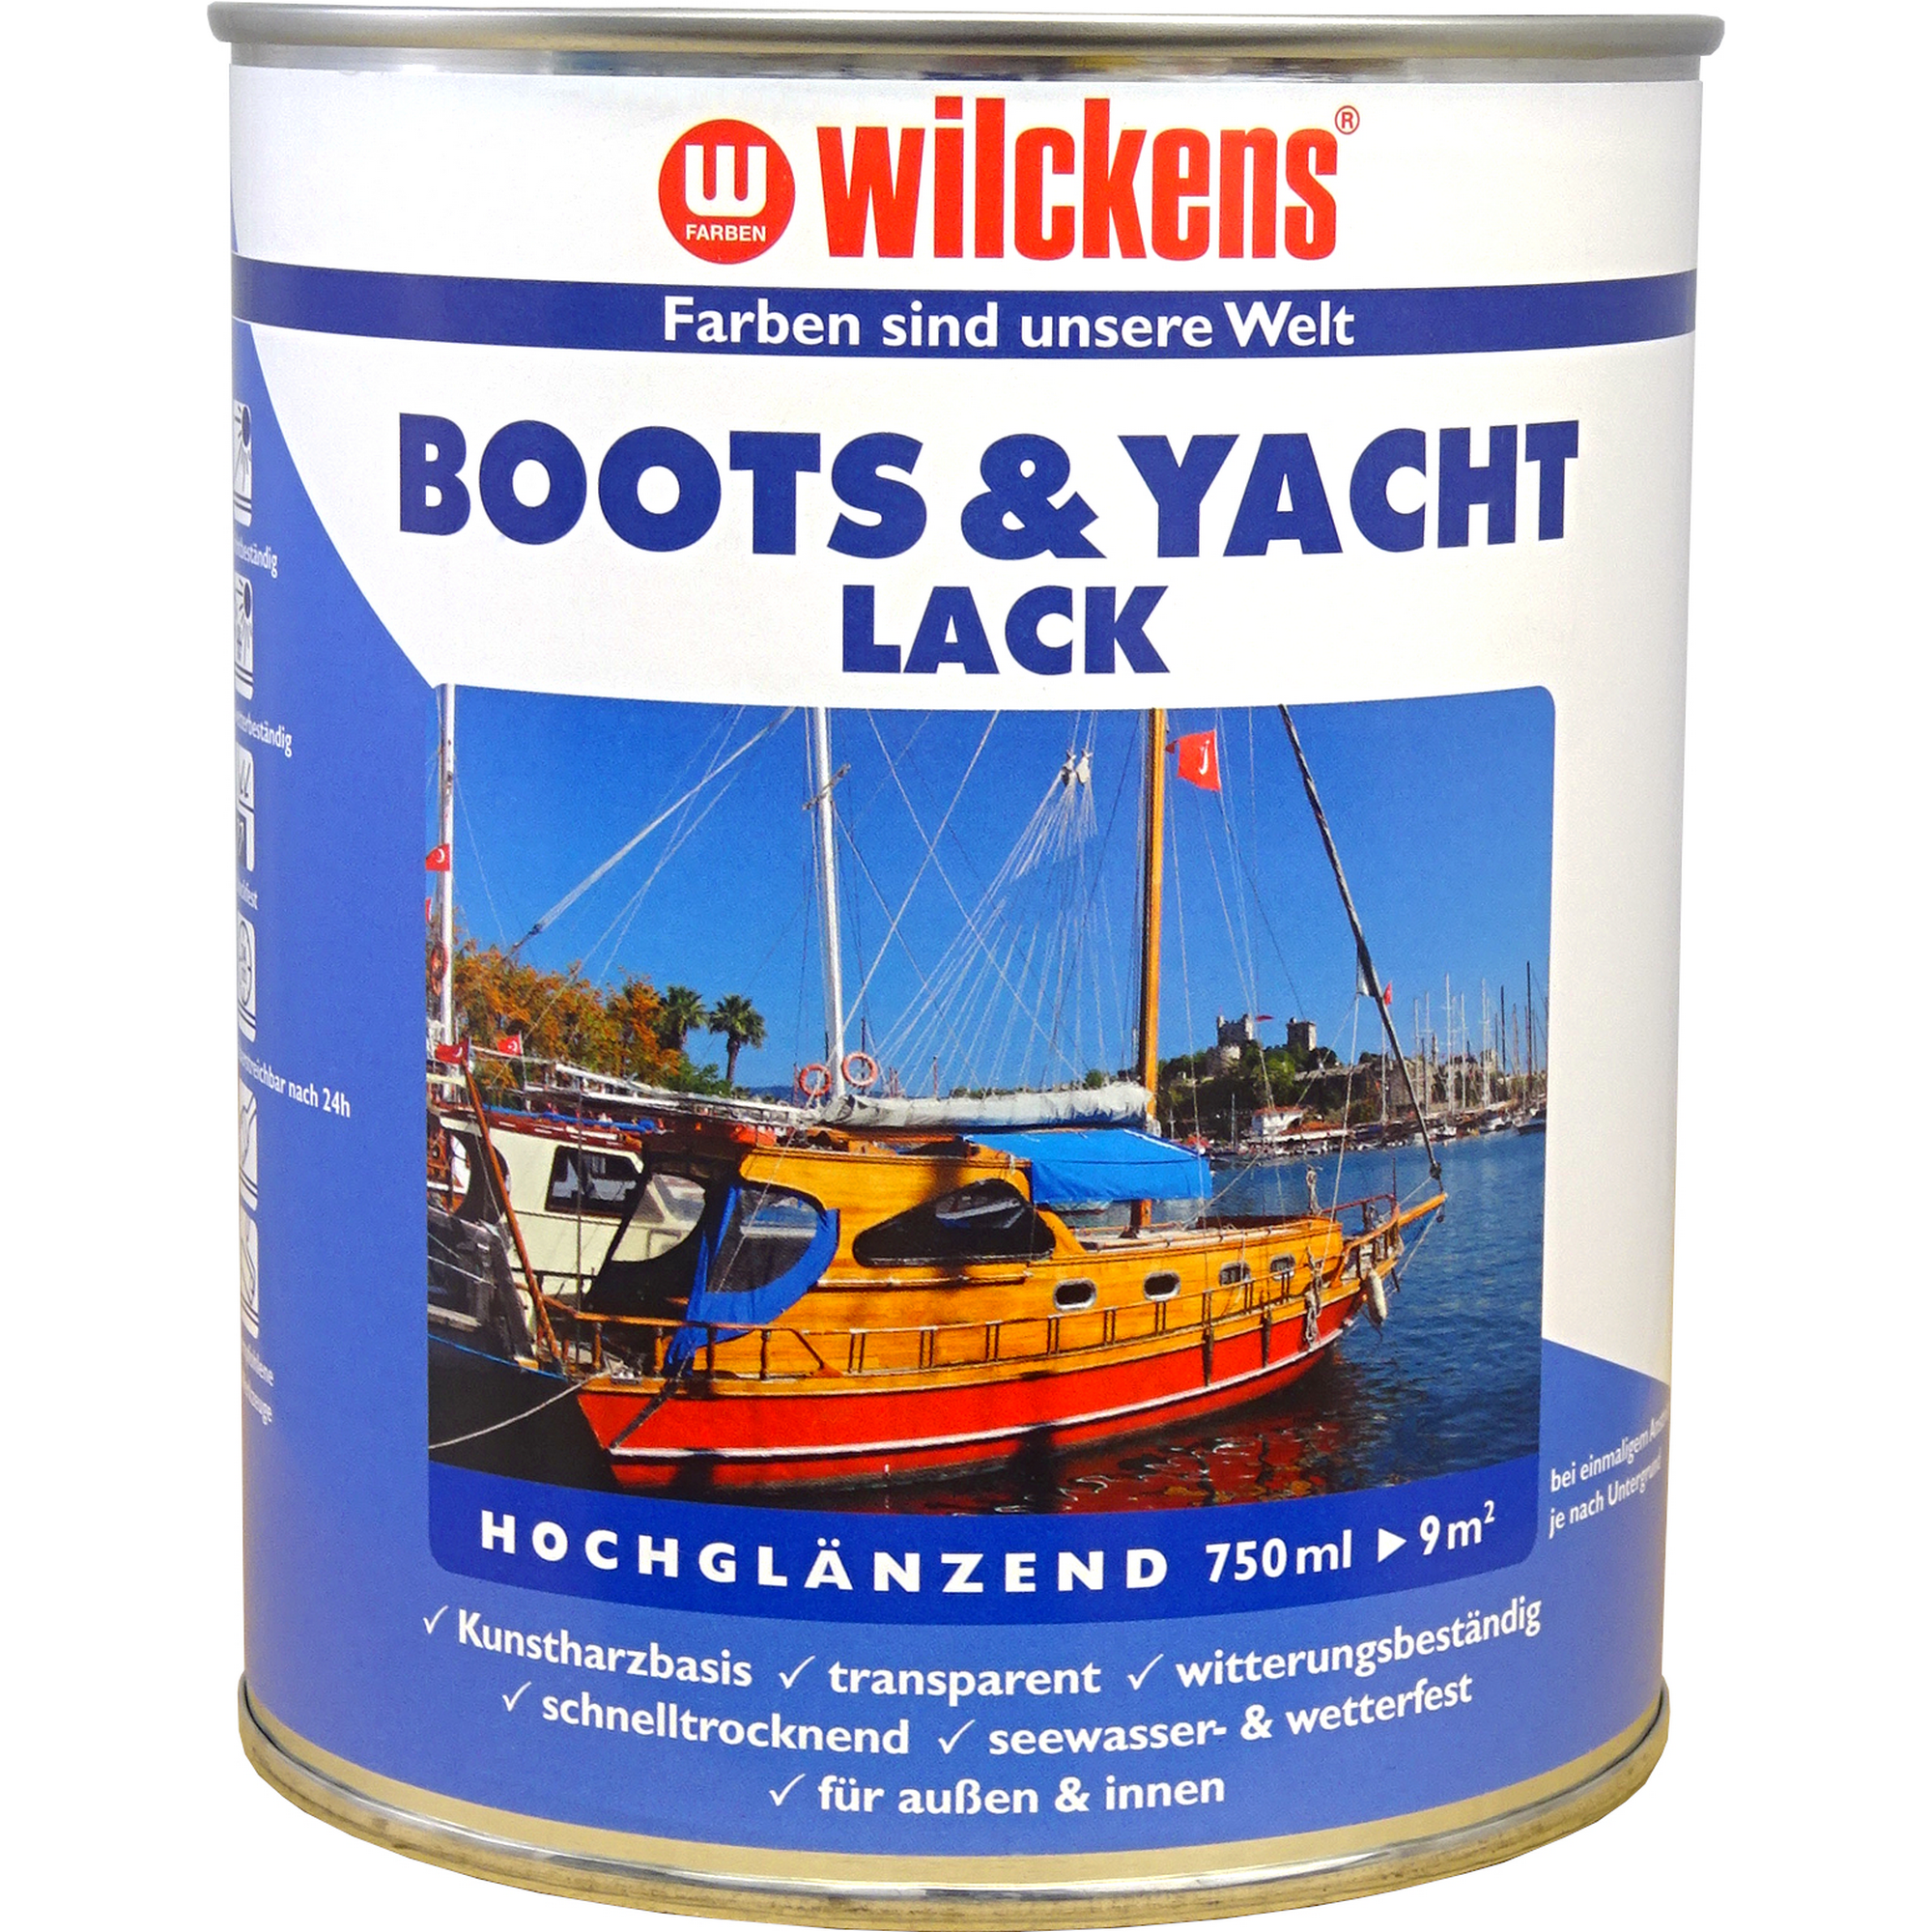 Boots- & Yachtlack hochglänzend 750 ml + product picture